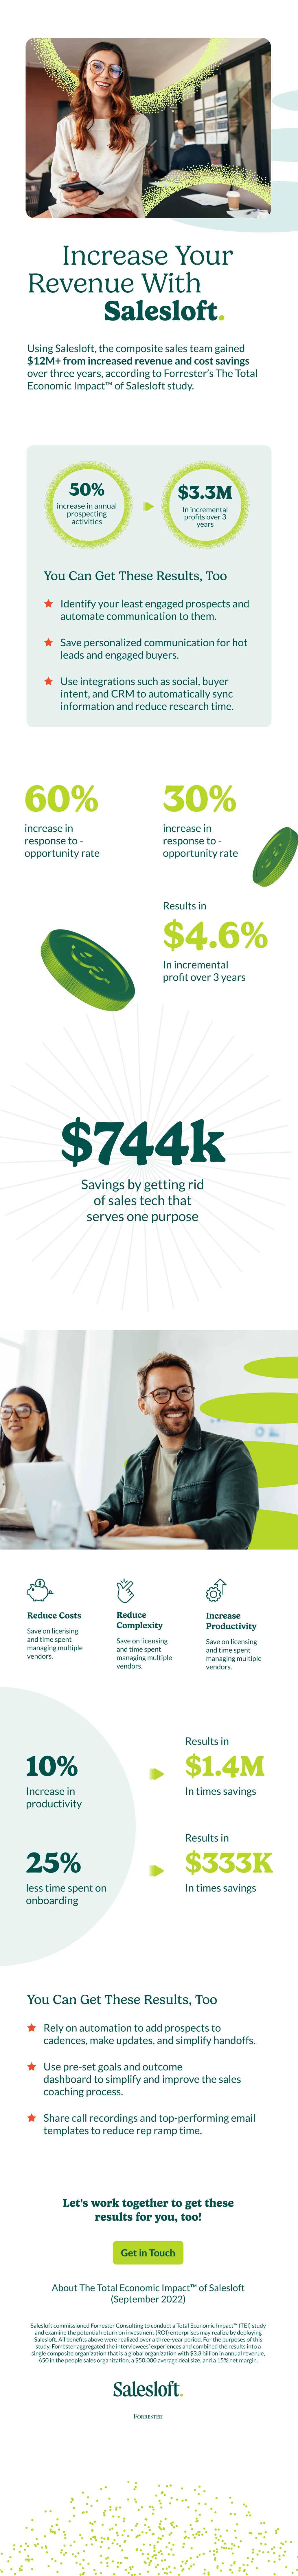 An infographic describing how Salesloft can drive more revenue